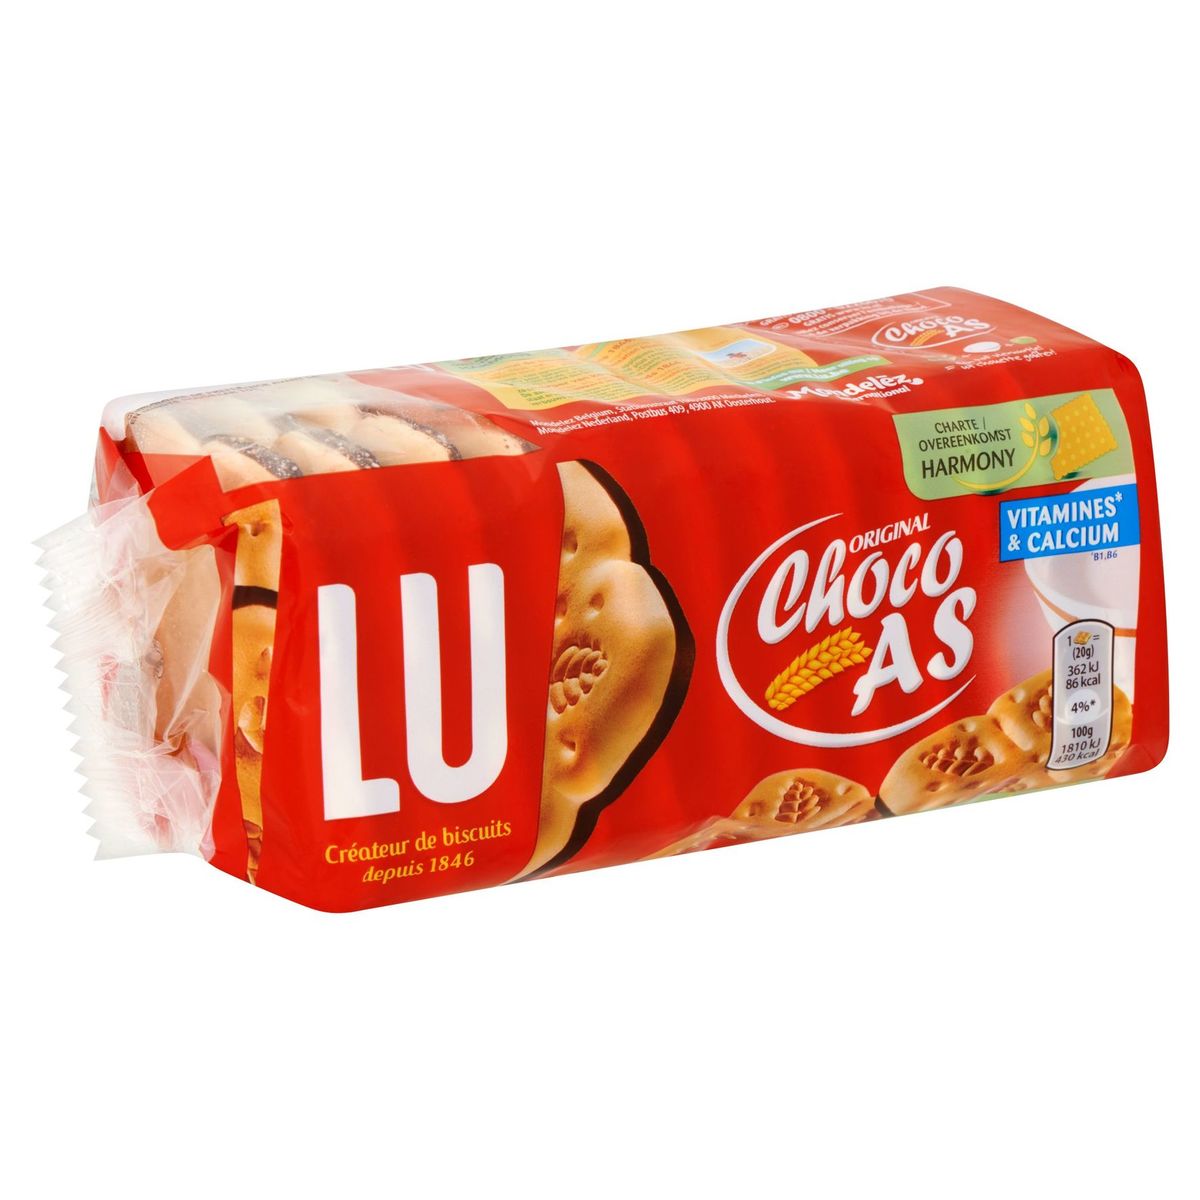 LU Choco As Original 240 g